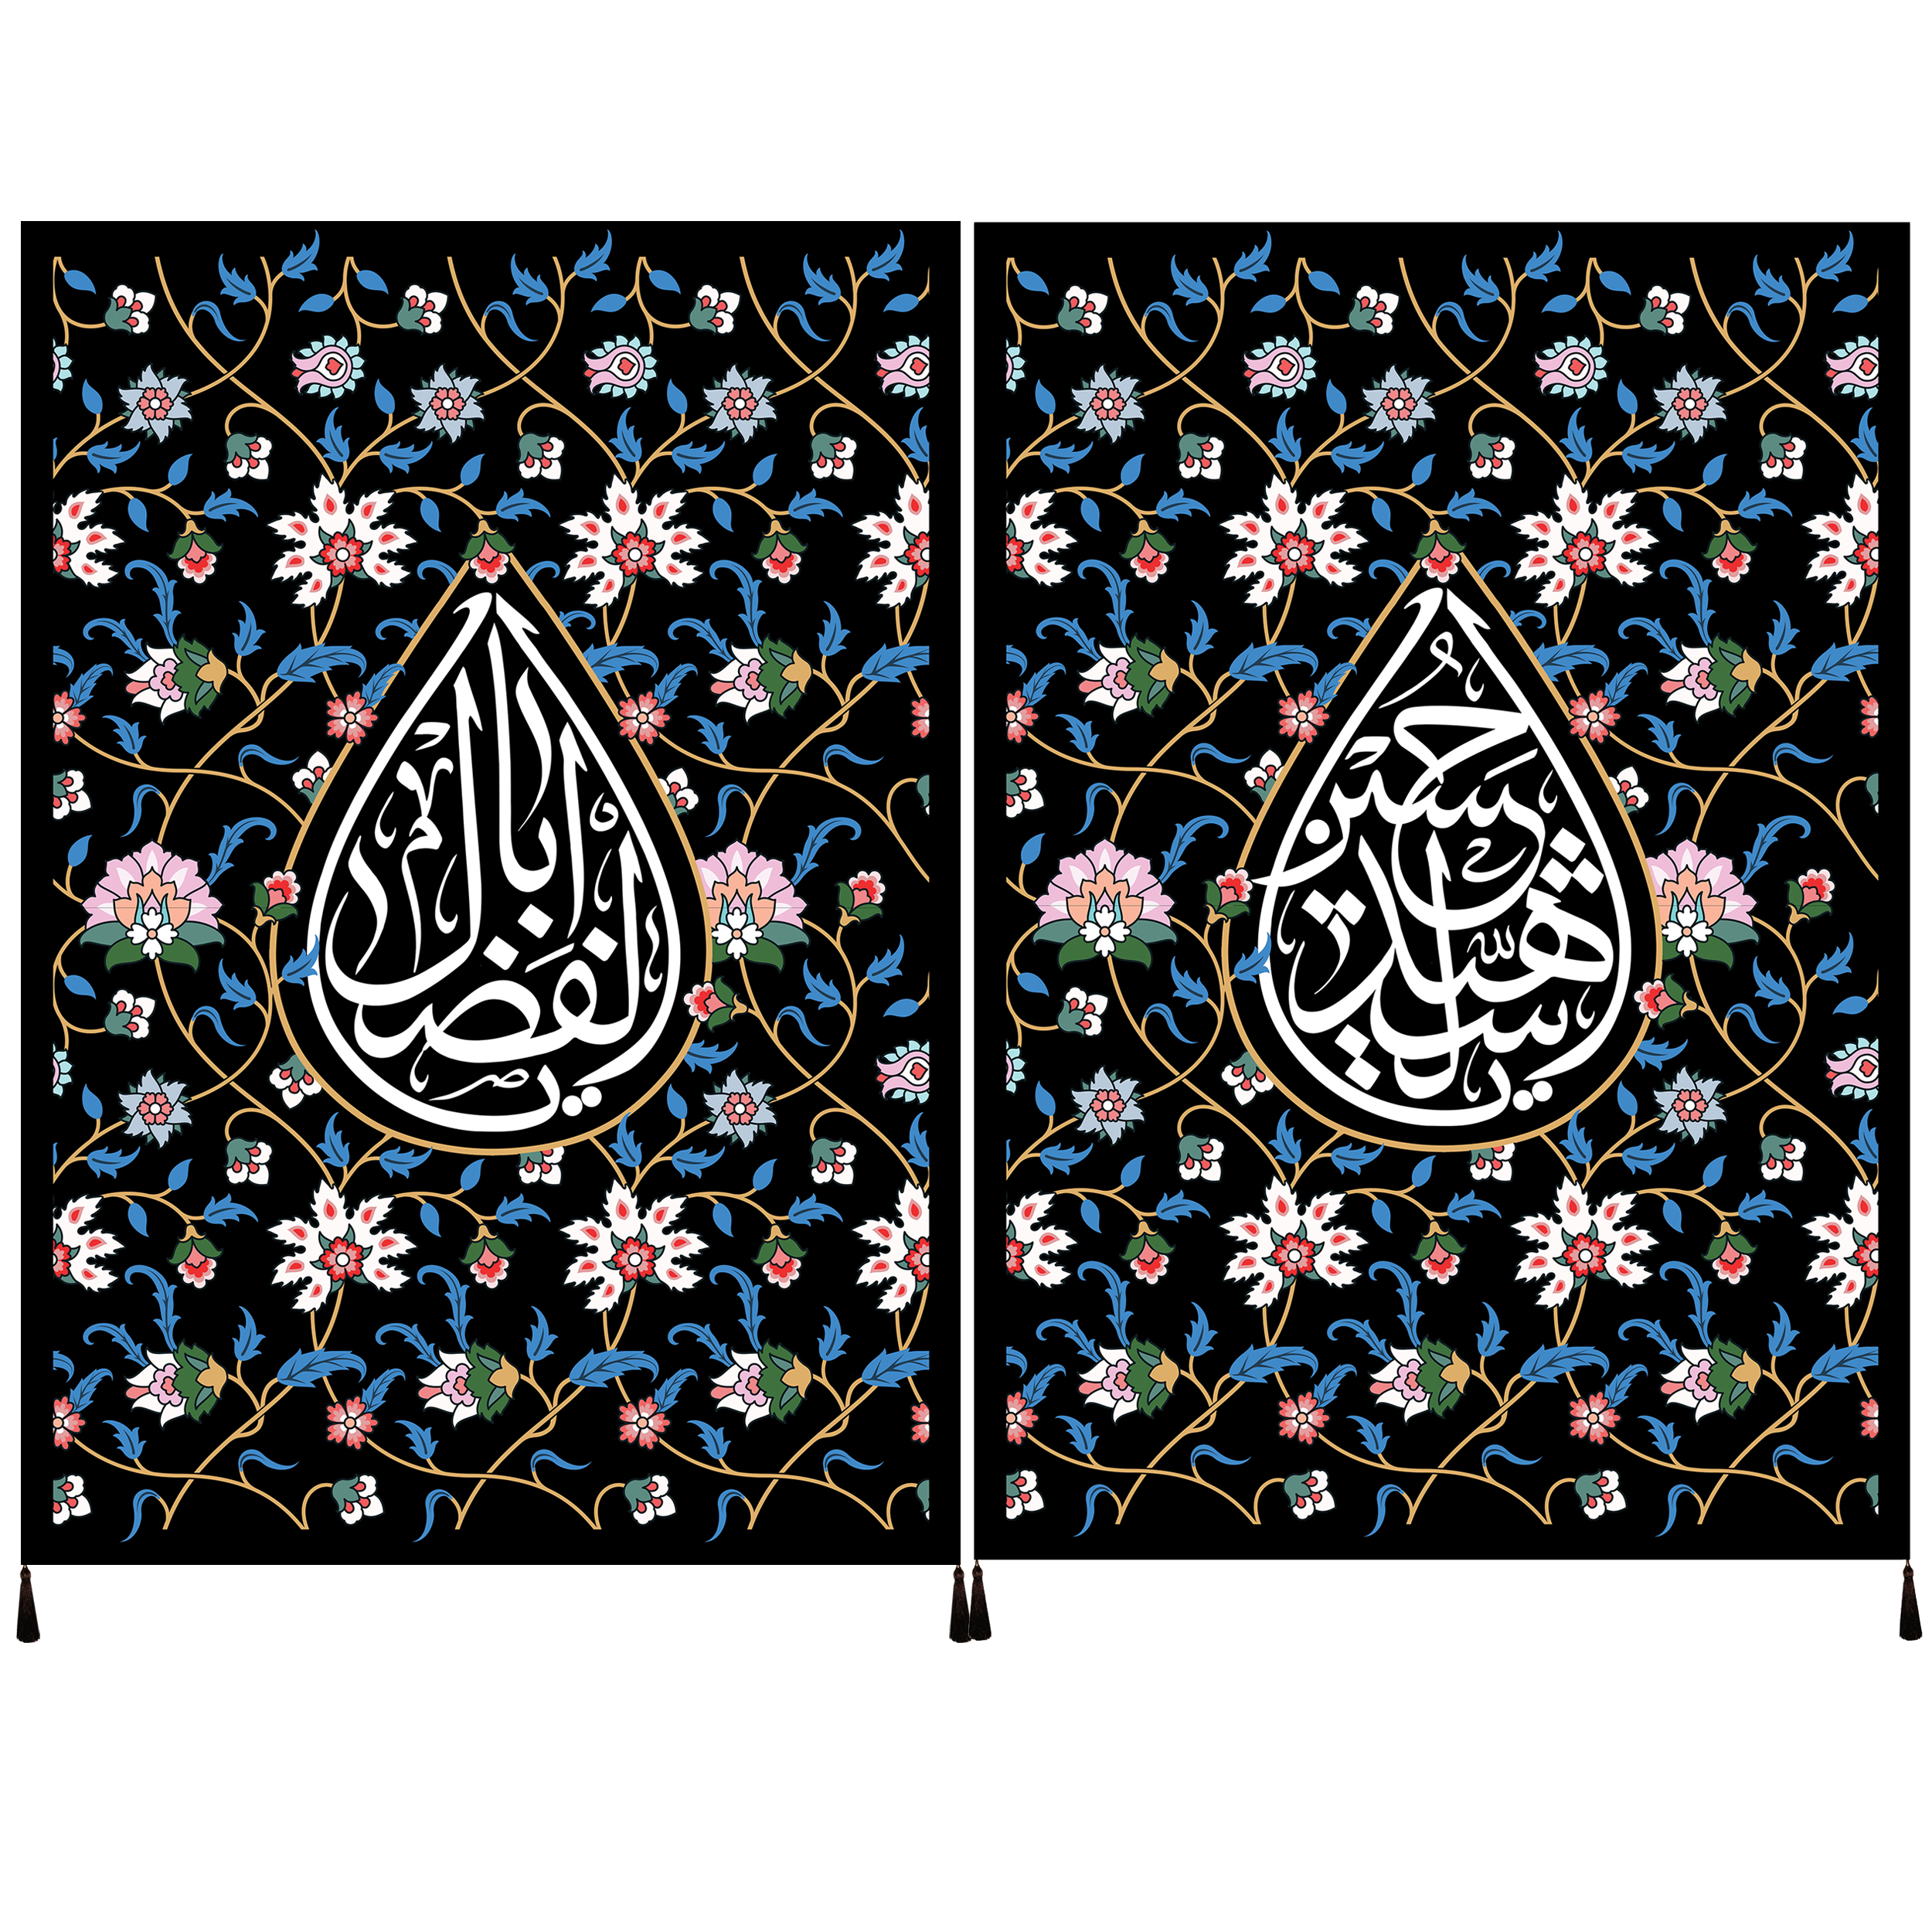 پرچم مدل محرم امام حسین علیه السلام کد 161169.5070 بسته 2 عددی